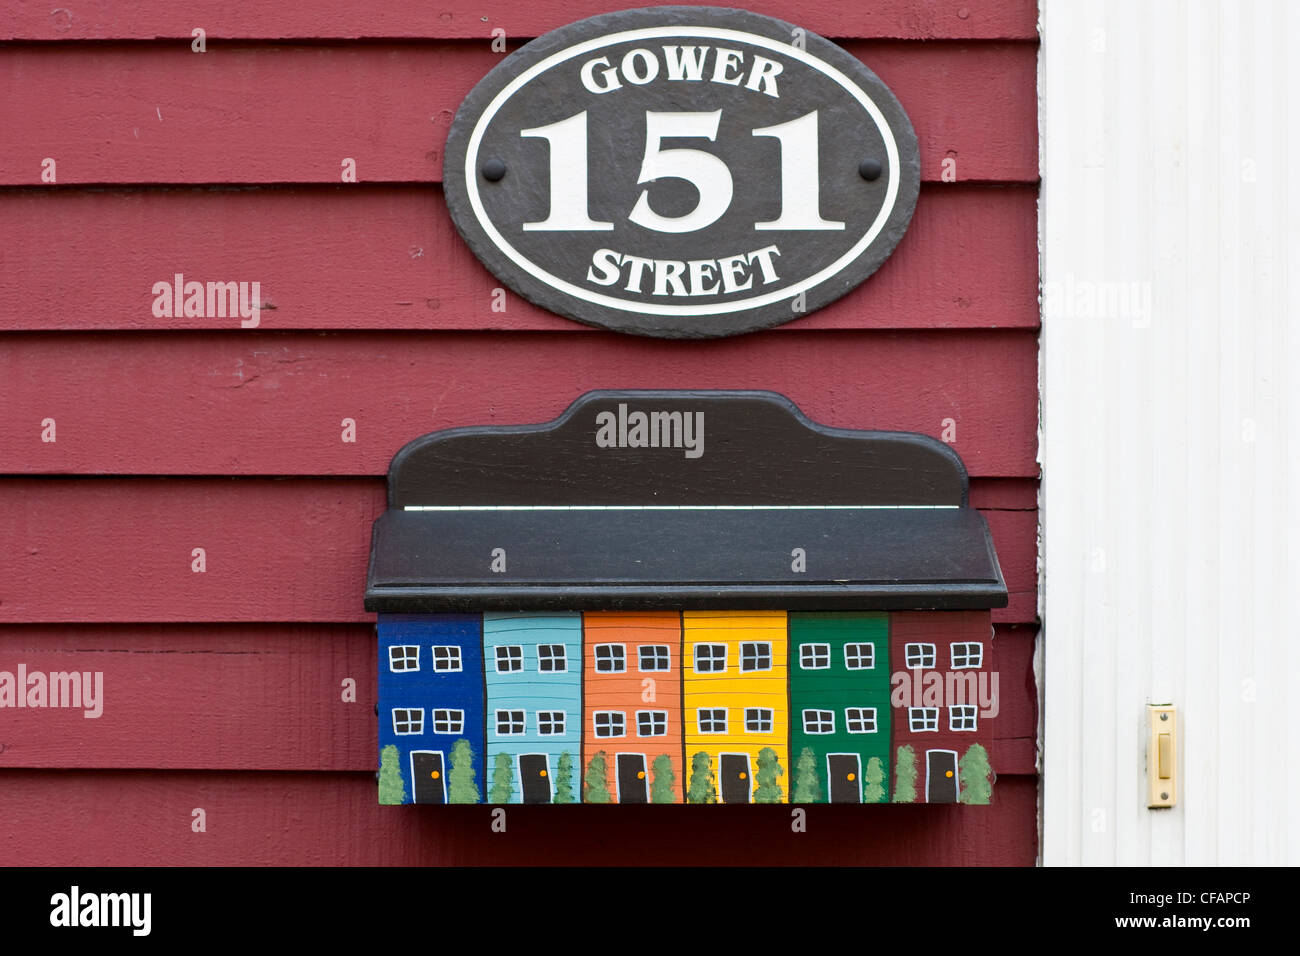 Painted mailbox, St. John's, Newfoundland and Labrador, Canada. Stock Photo